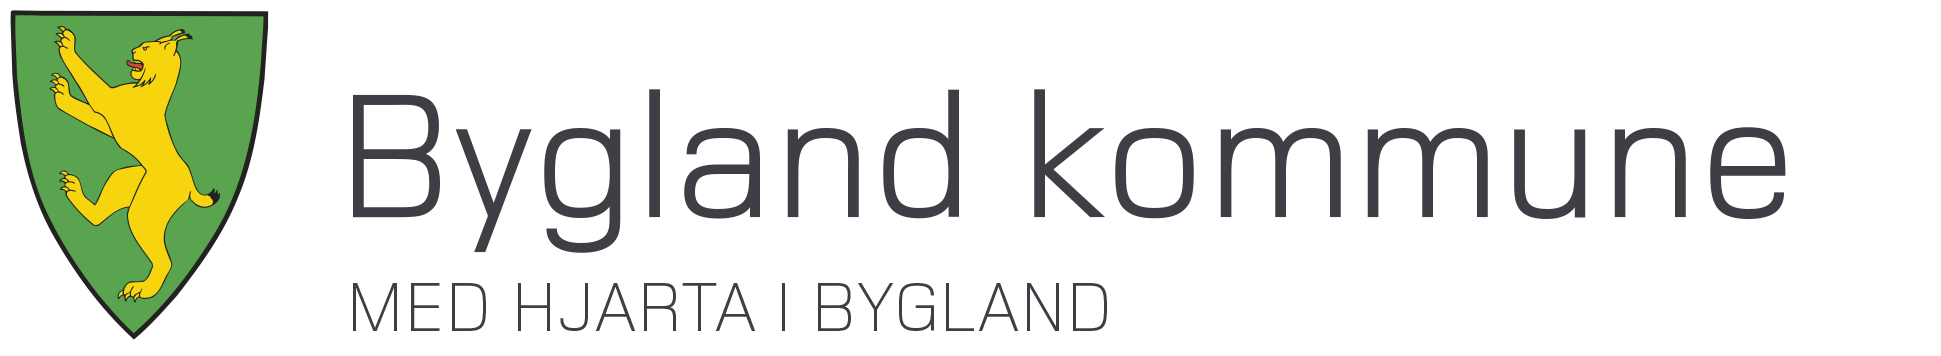 Bygland kommune logo